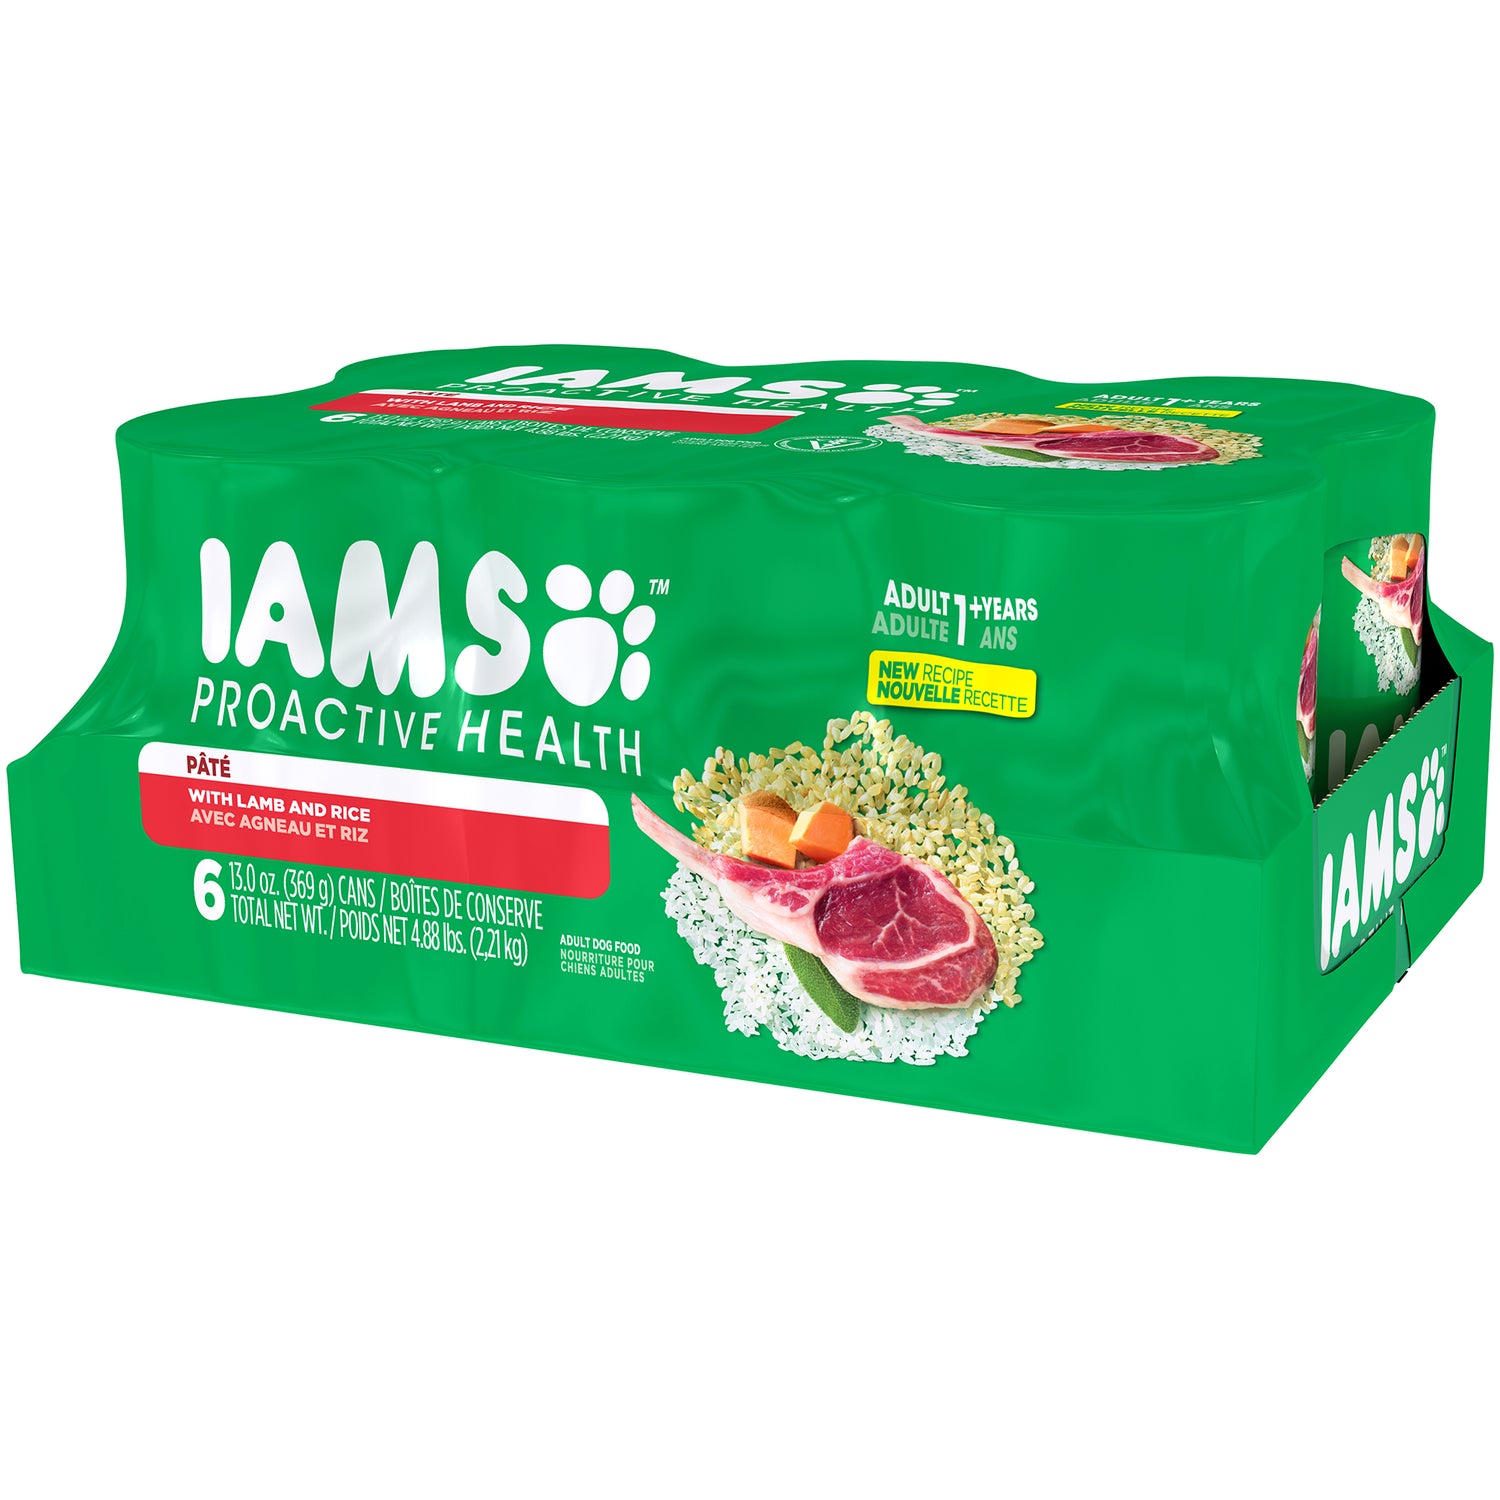 IAMS PROACTIVE HEALTH Adult Soft Wet Dog Food Paté with Lamb & Rice, (6) 13 Oz. Cans